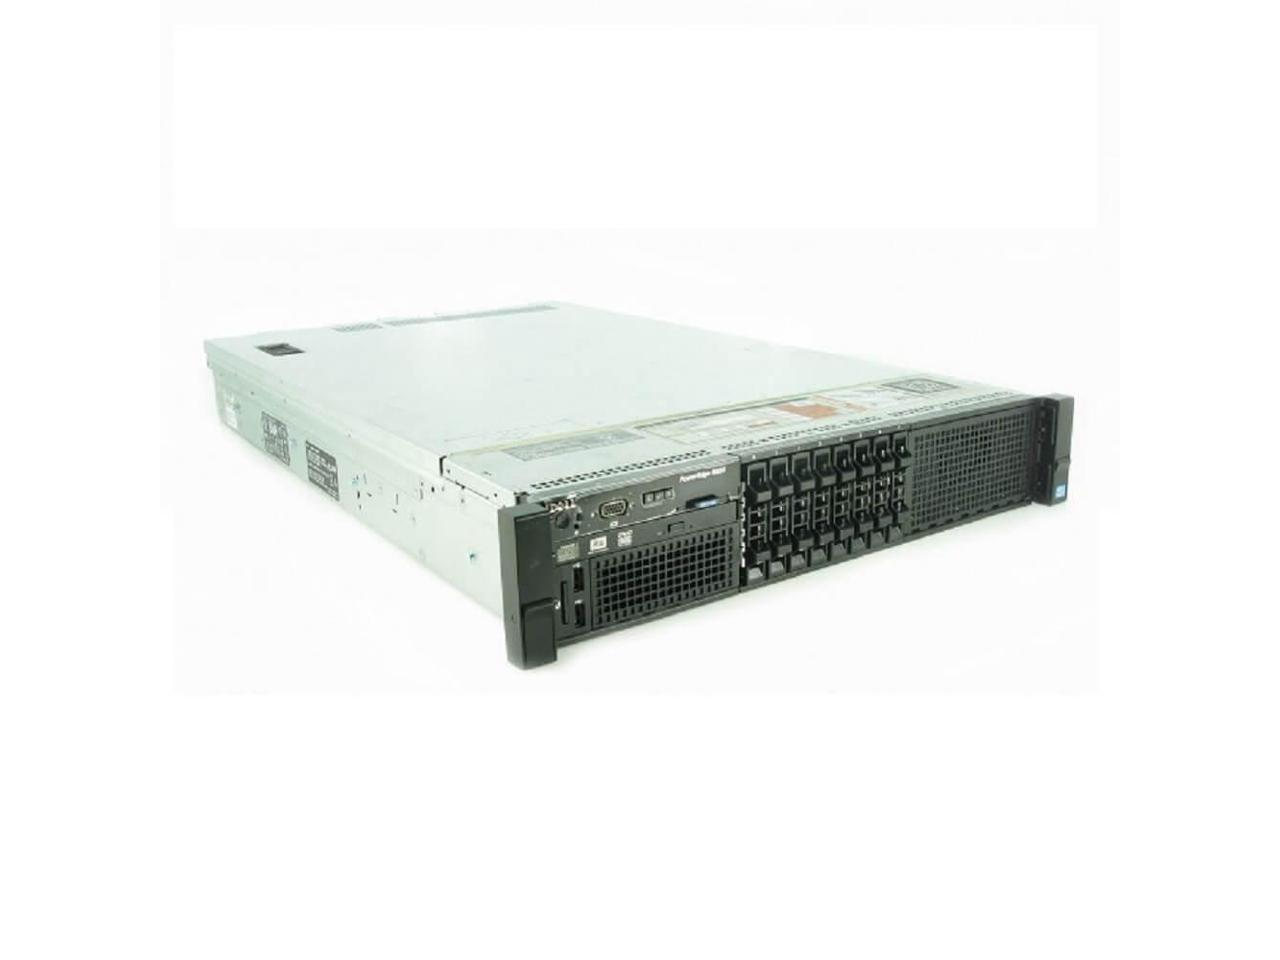 RAM Mounts NEW Dell PowerEdge R740xd Server 2x 16C Platinum 8153 128GB Ram 24x 600GB HDD 